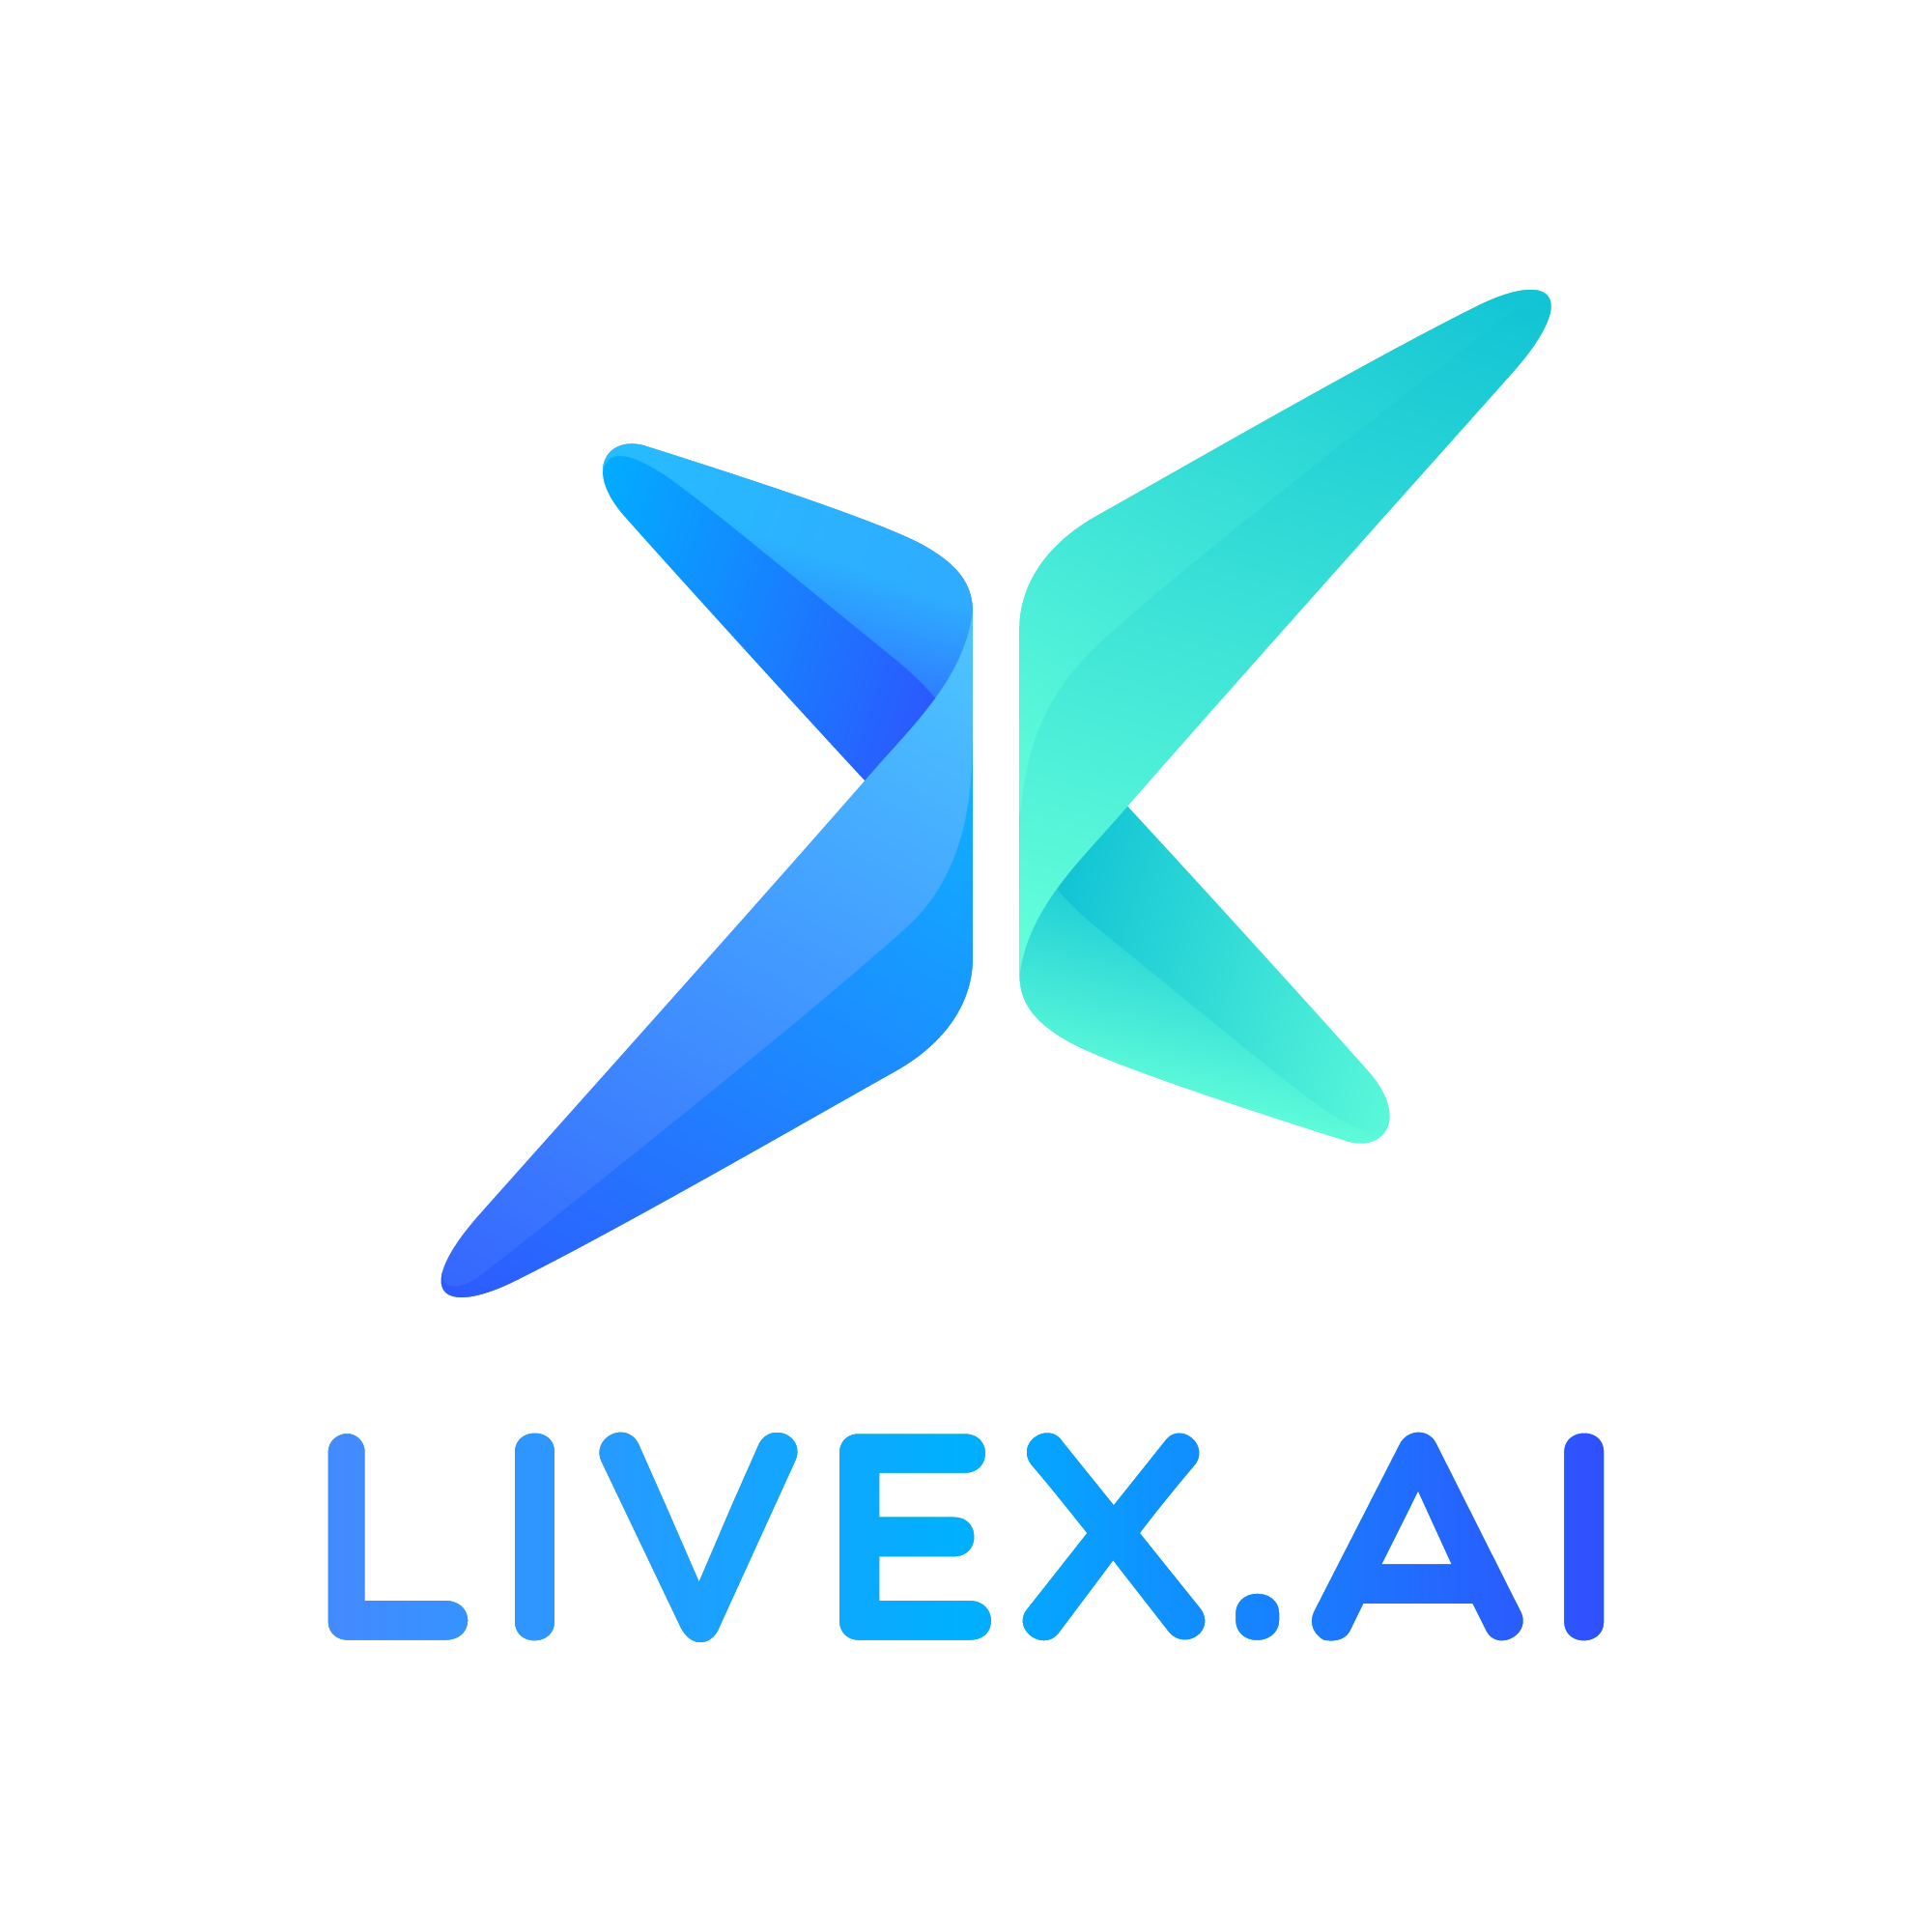 Livex logo b2